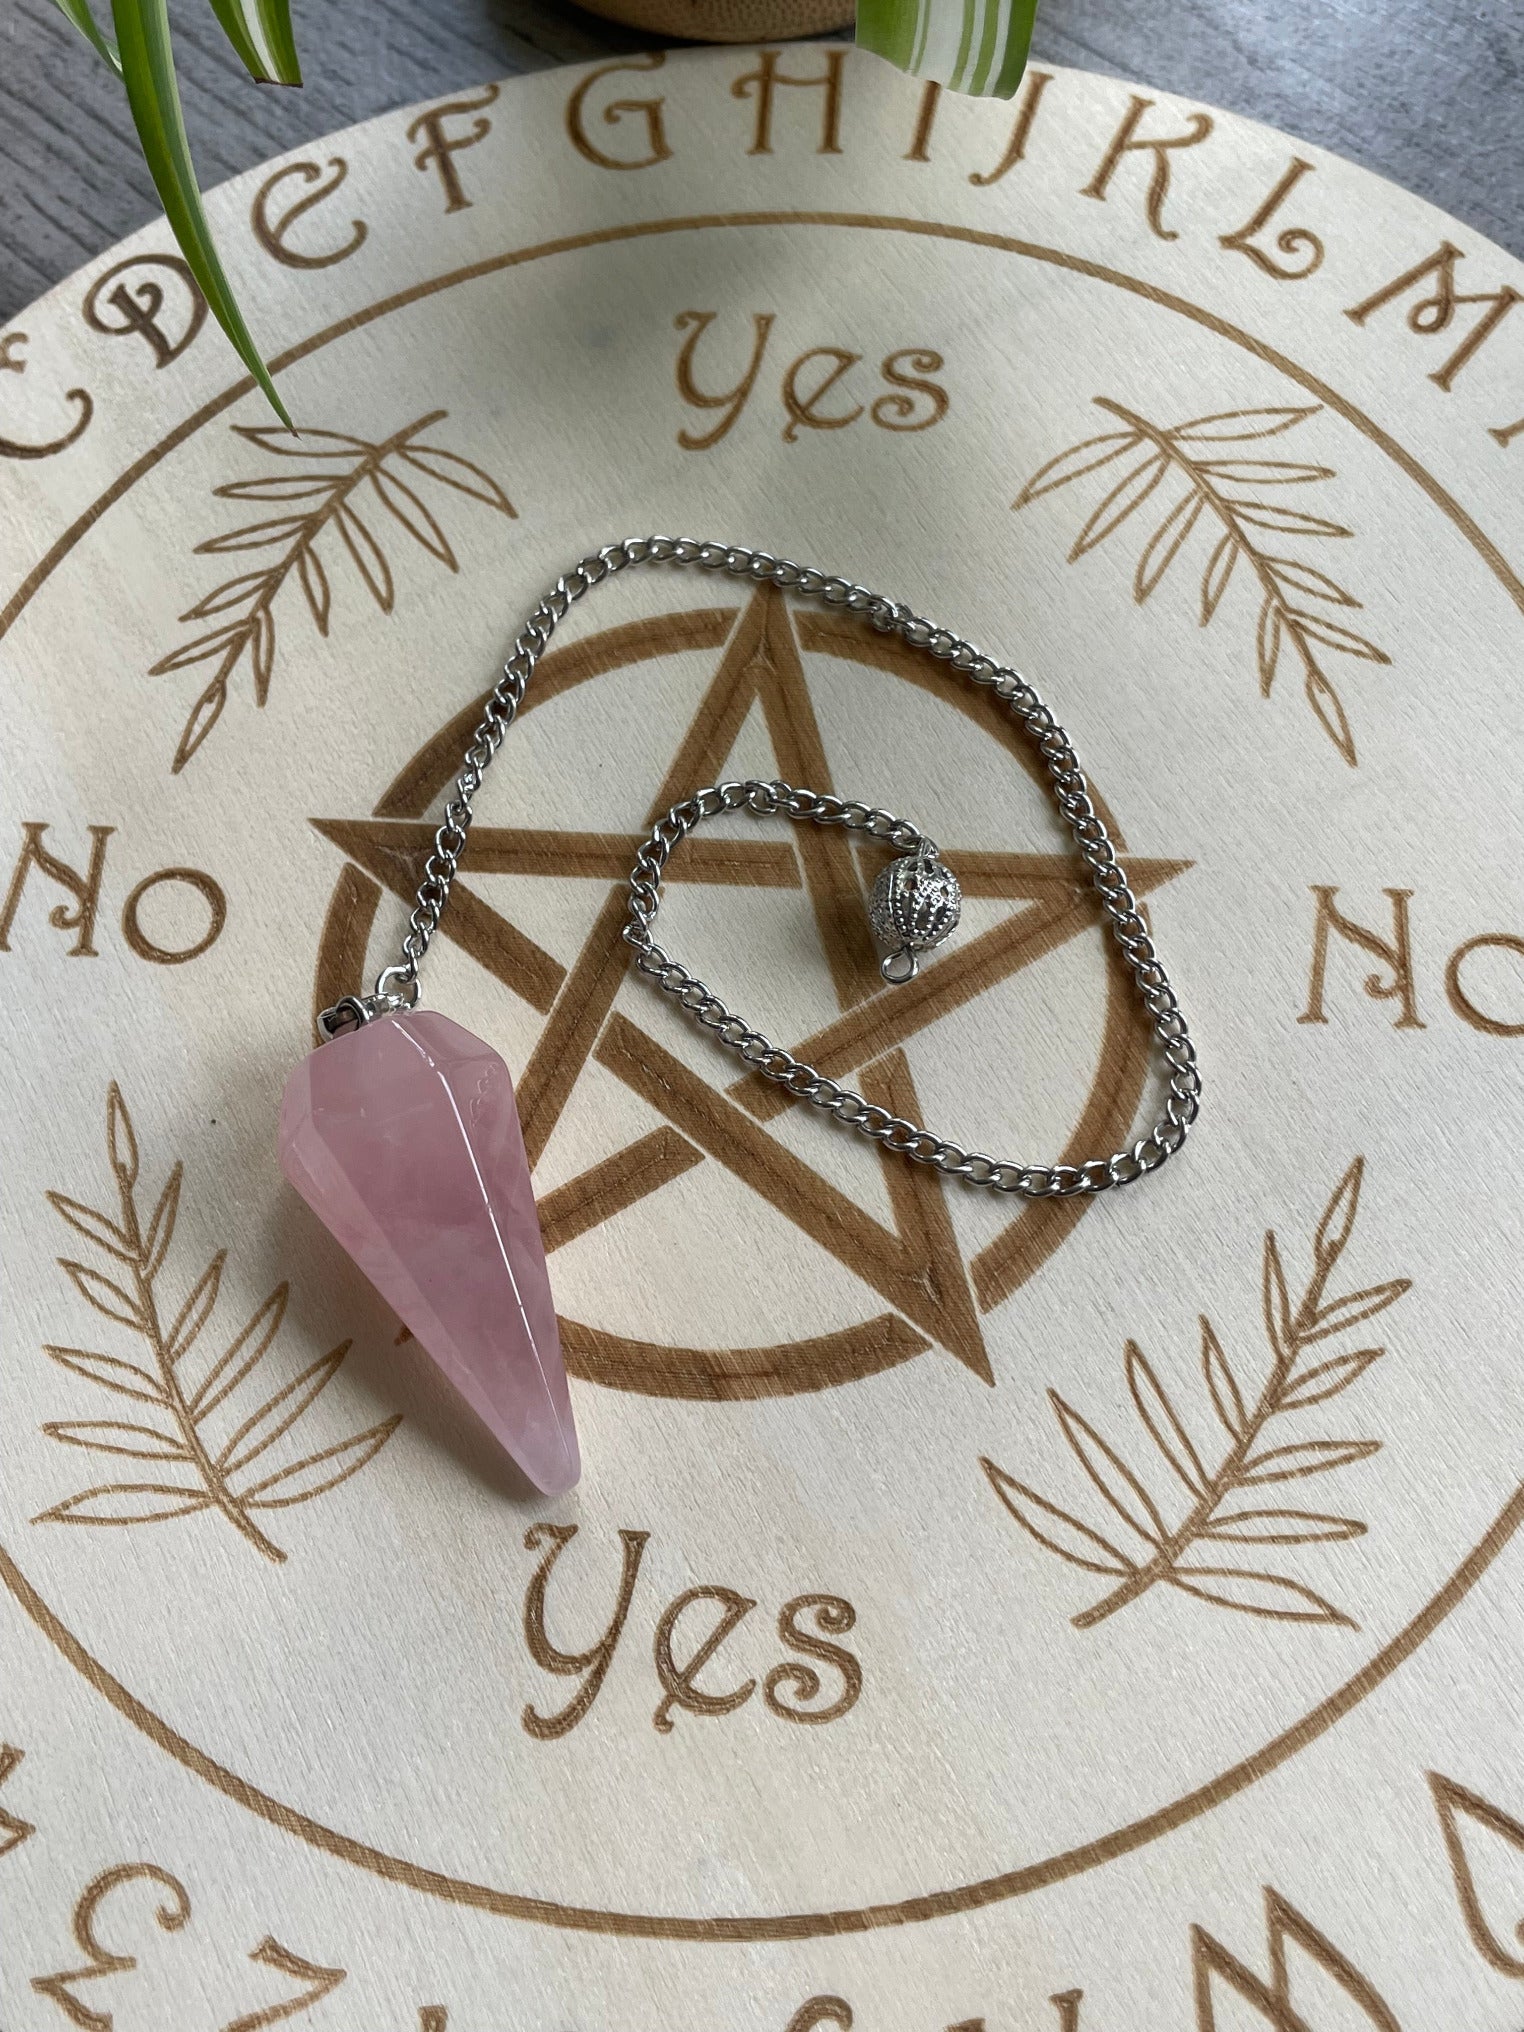 A pink rose quartz crystal pendulum sits atop a wooden divination board.